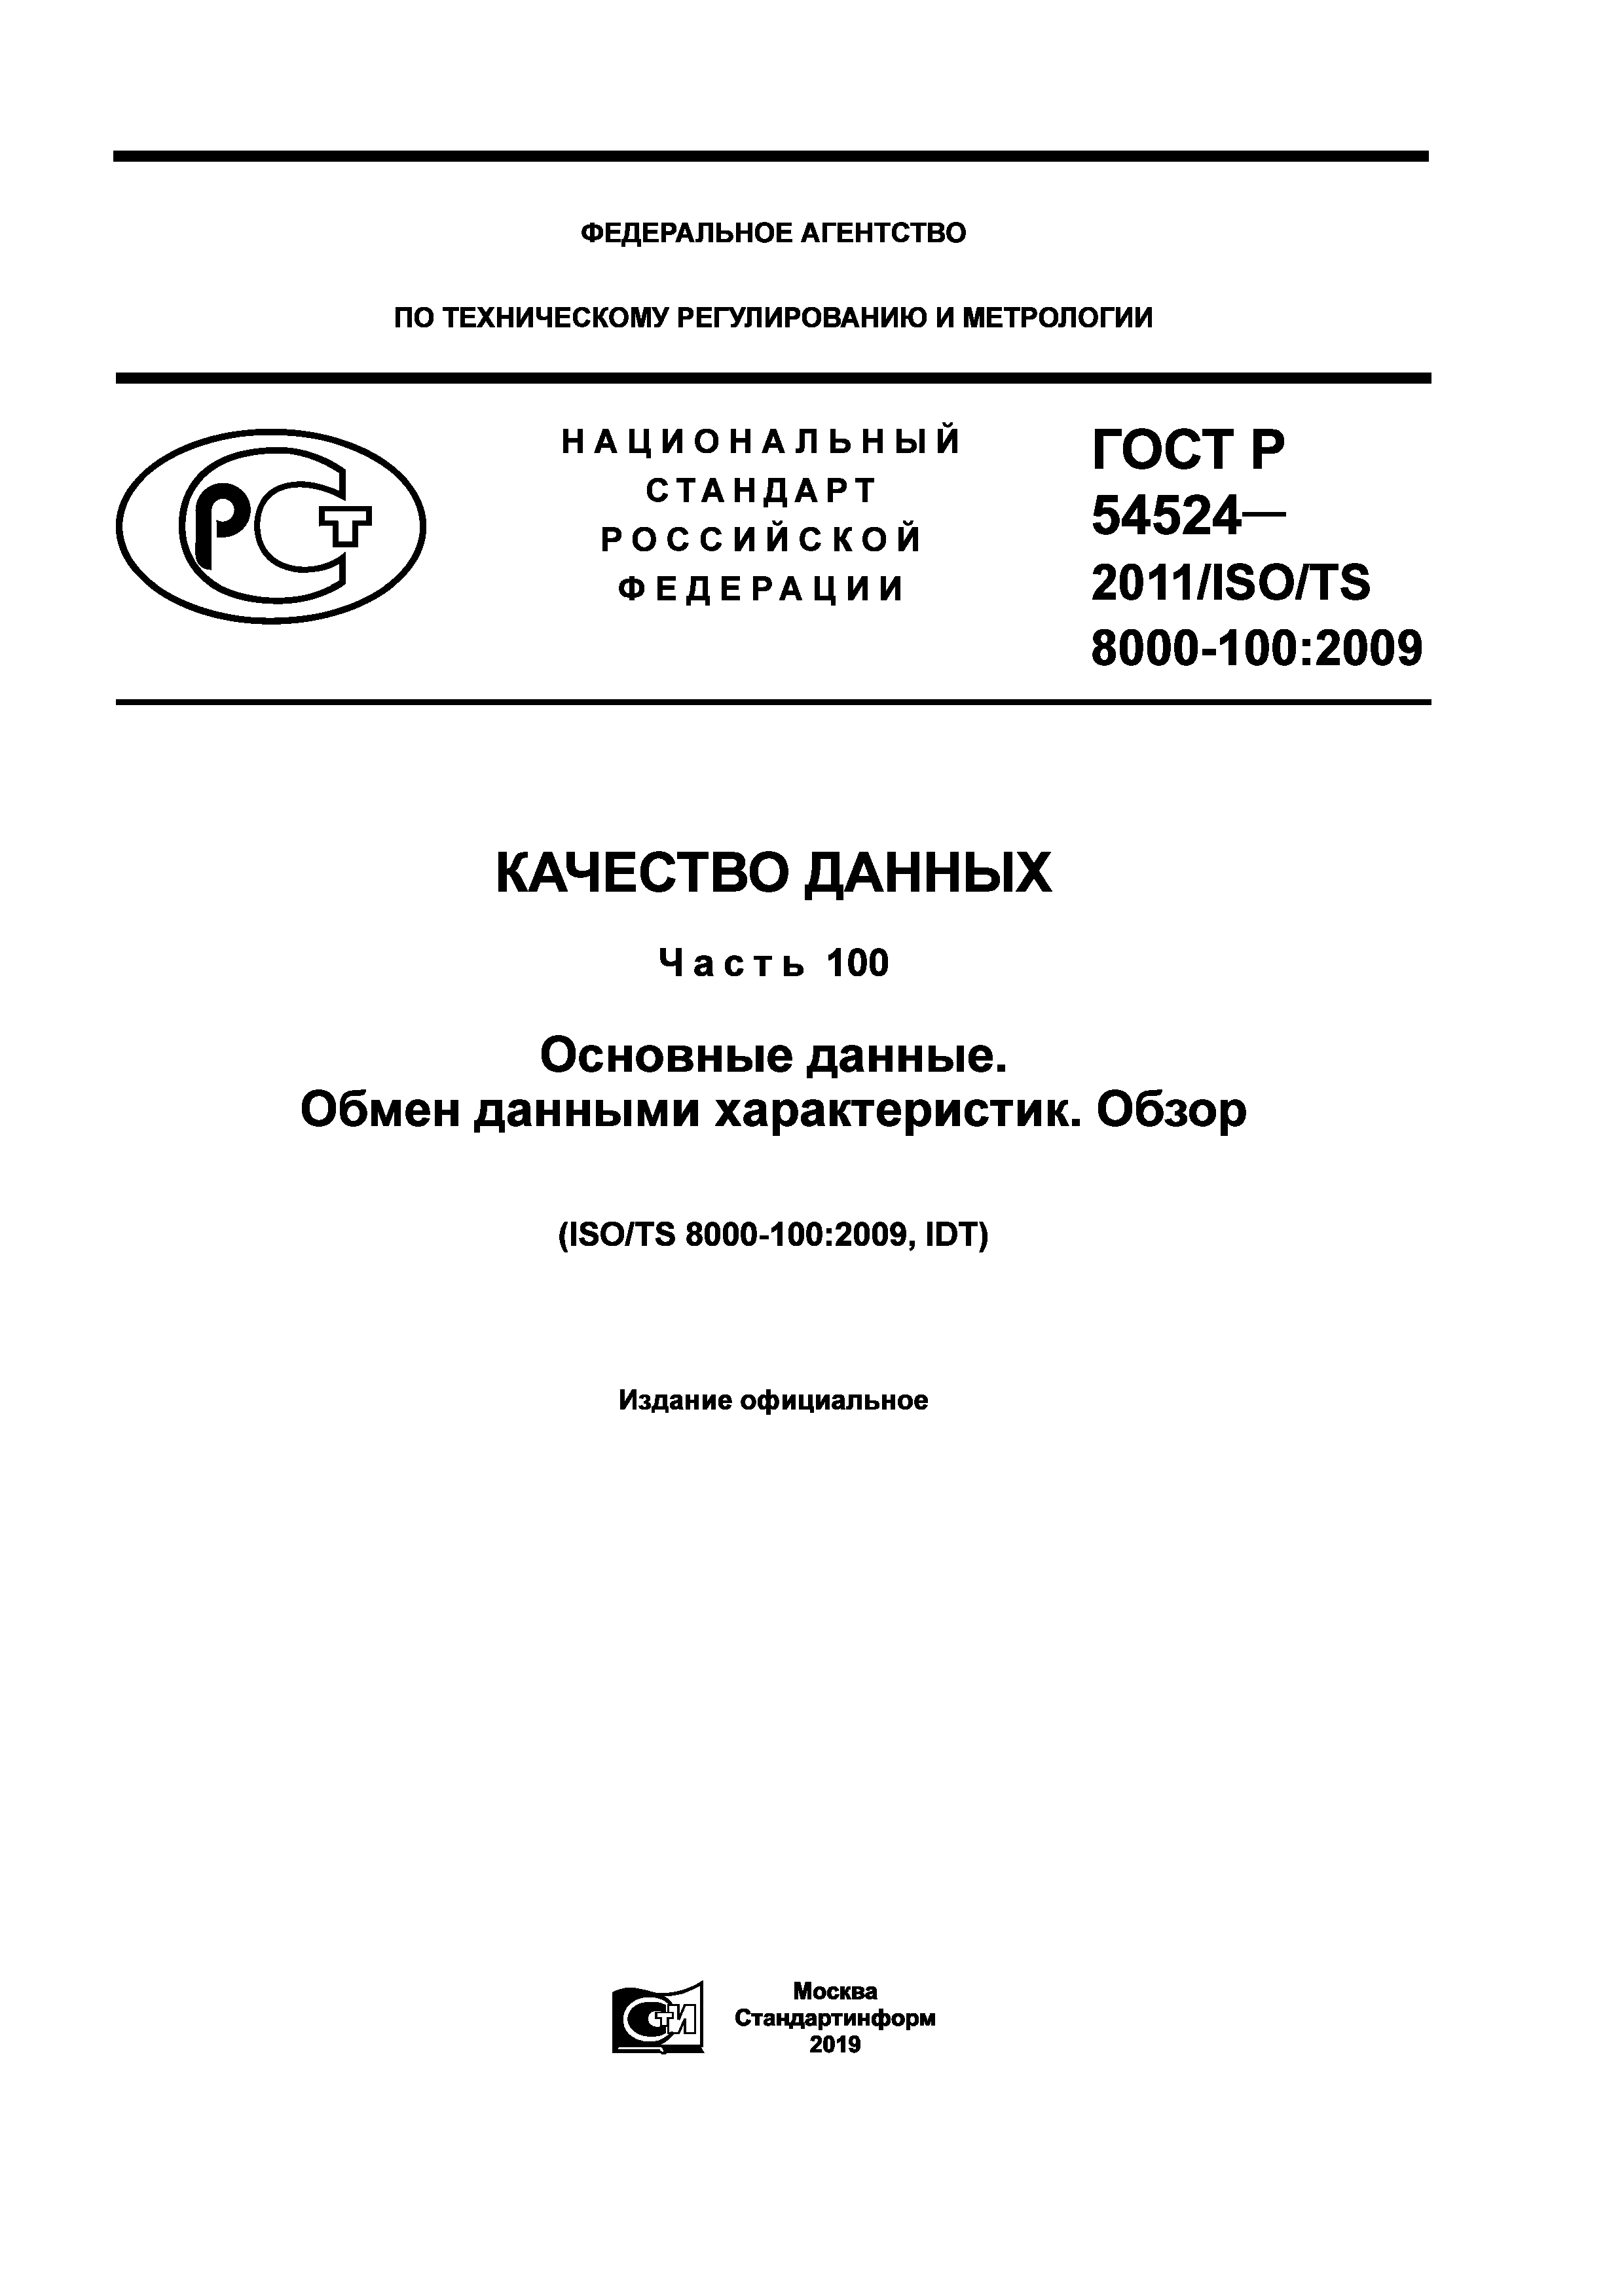 ГОСТ Р 54524-2011